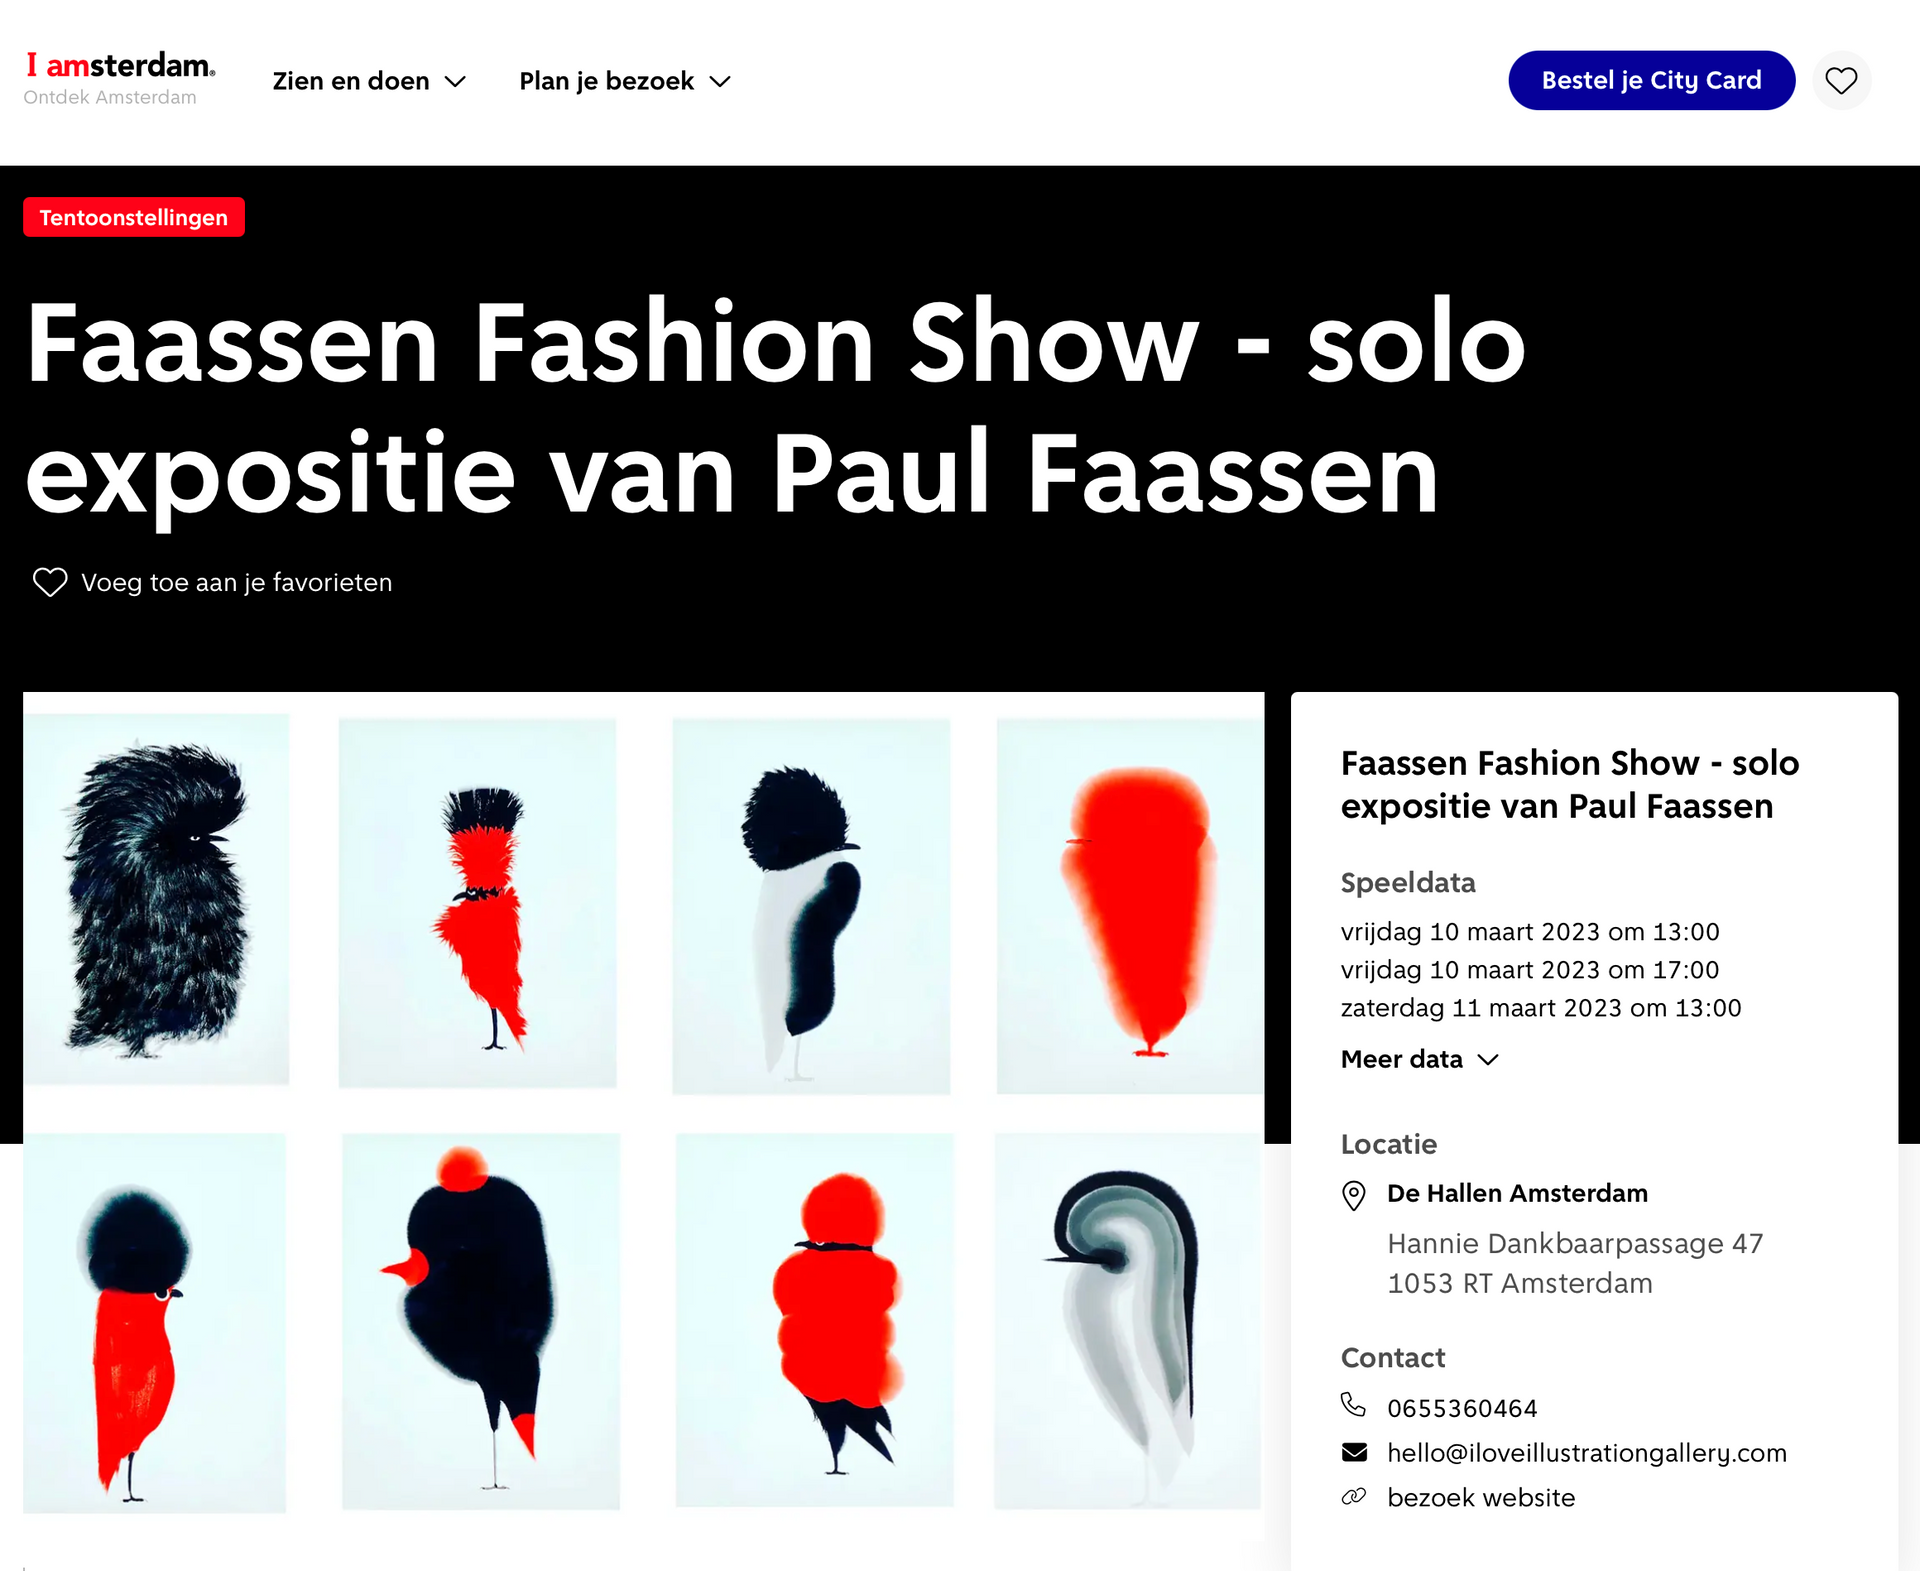 Faassen Fashion Show solo expo Paul Faassen I Love Illustration Gallery